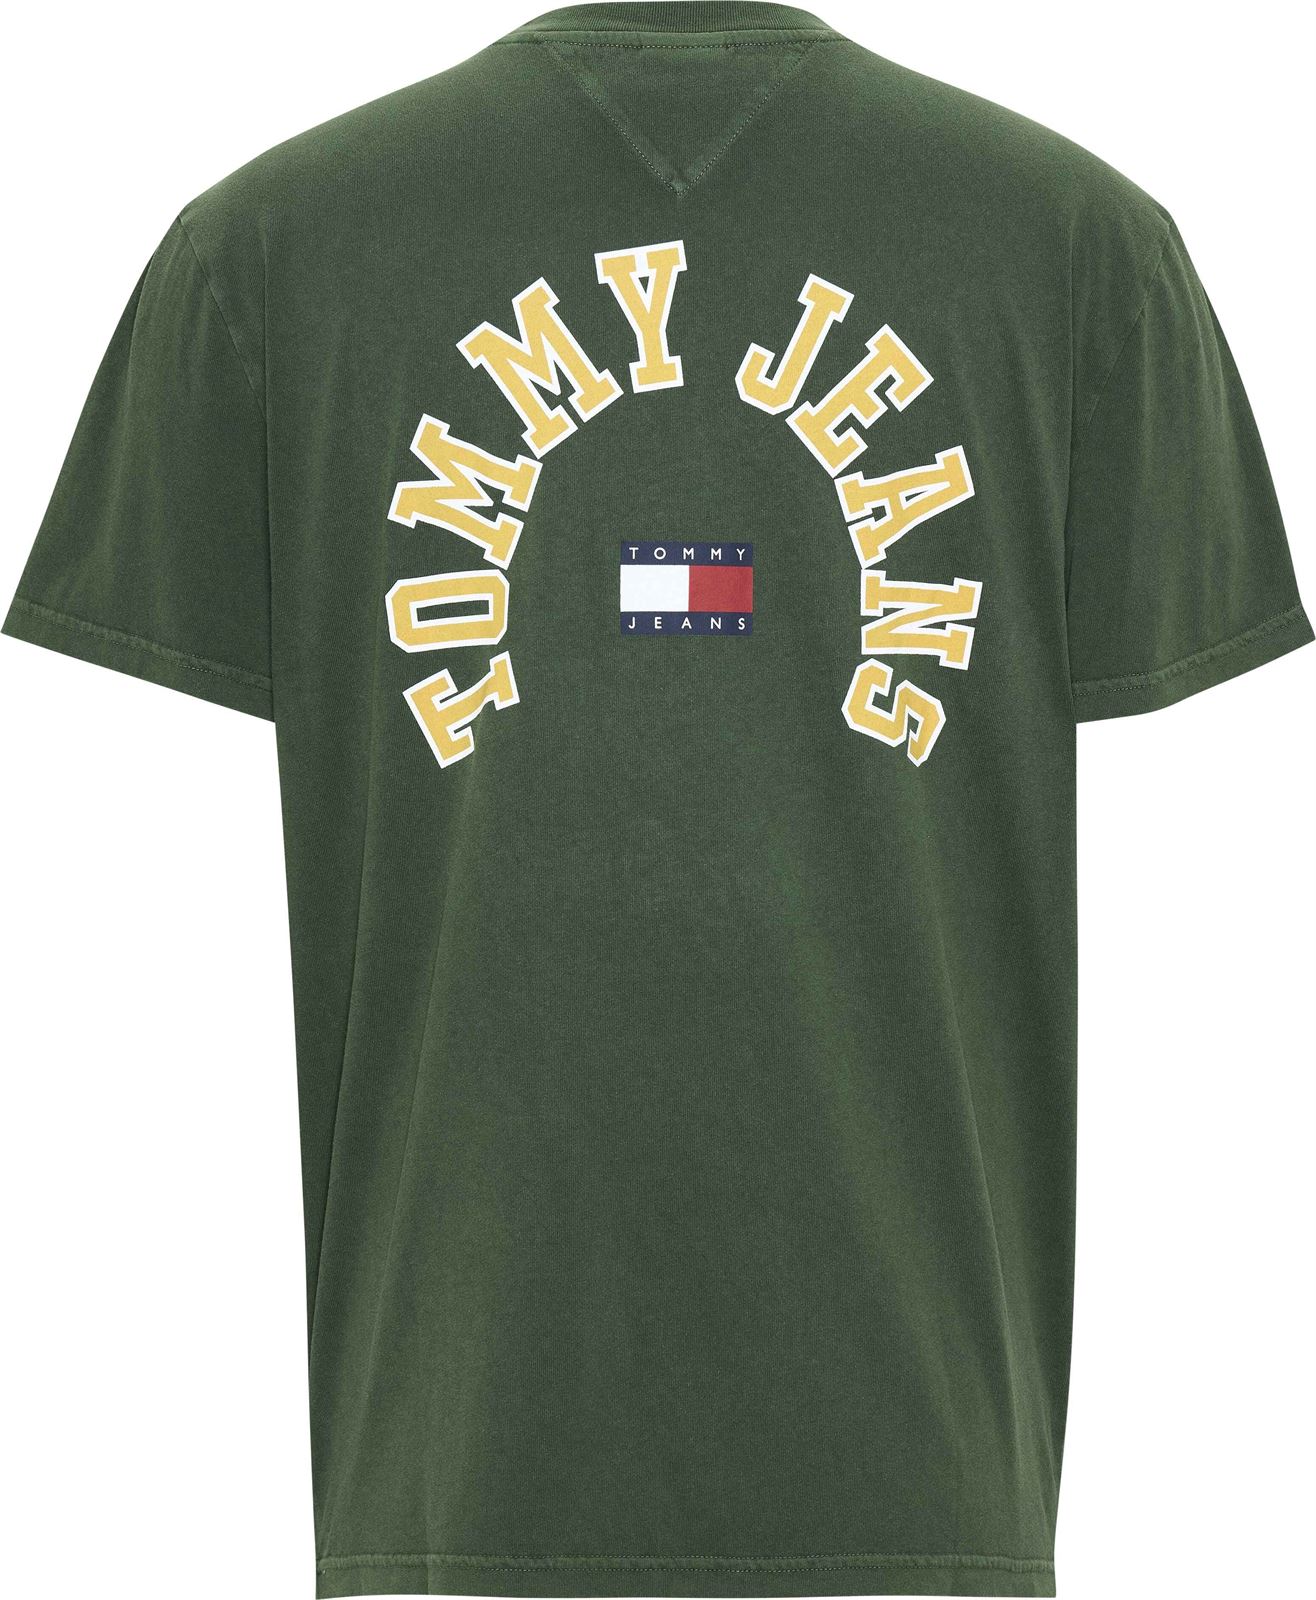 Camiseta TOMMY JEANS DM0DM16830 L2M collegiate green - Imagen 3